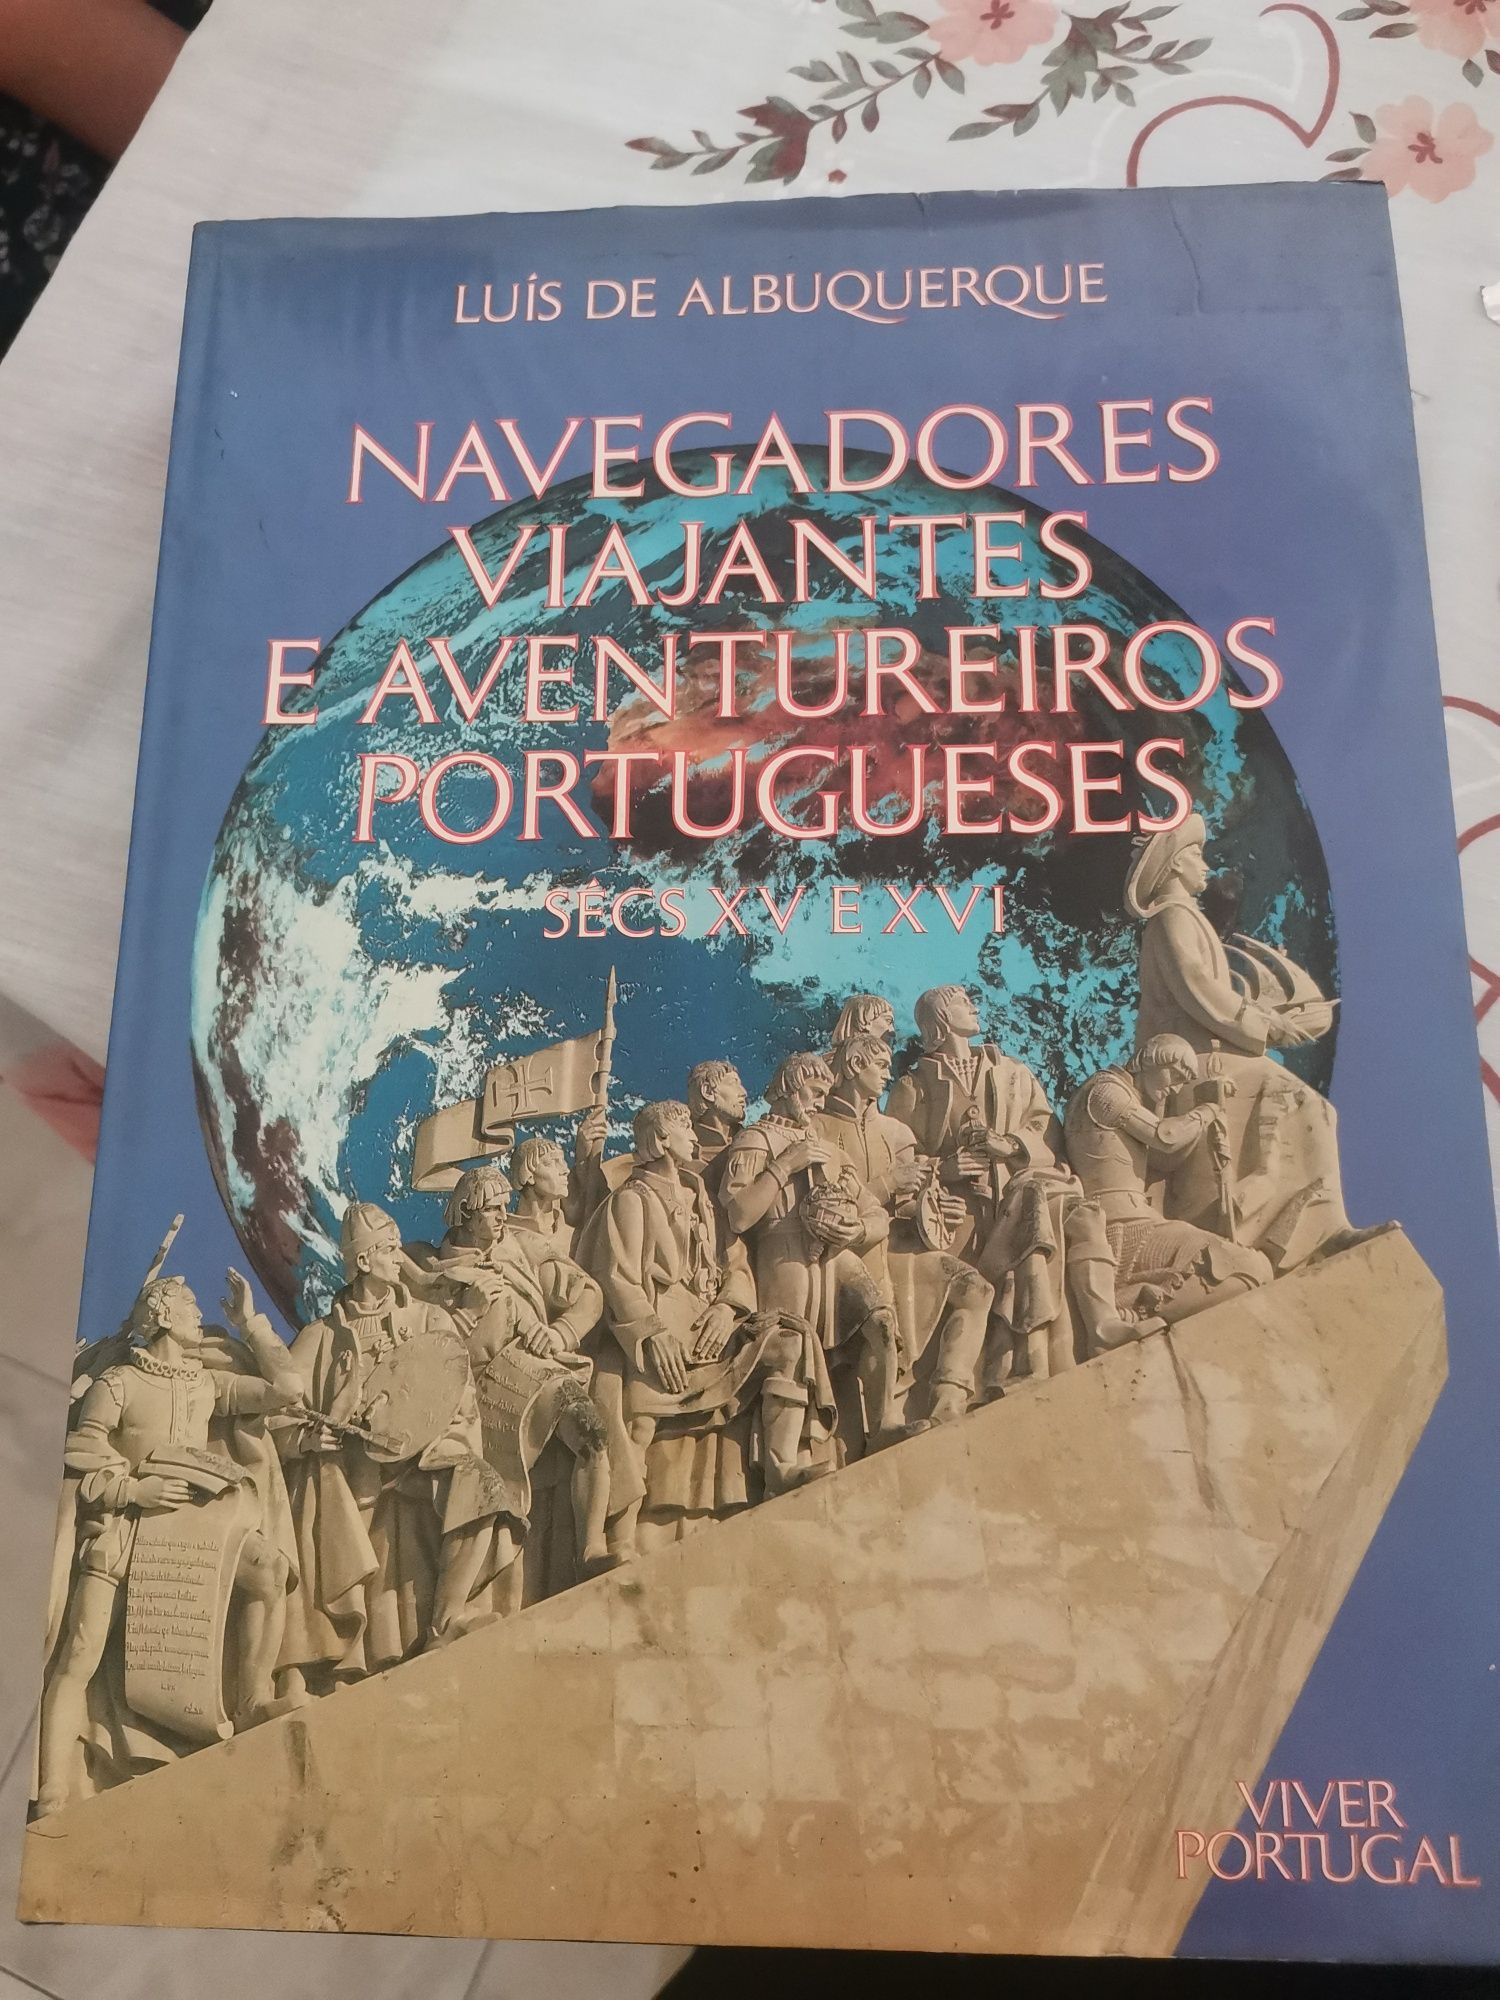 Colecao "Navegadores Vianjantes e aventureiros portugueses"